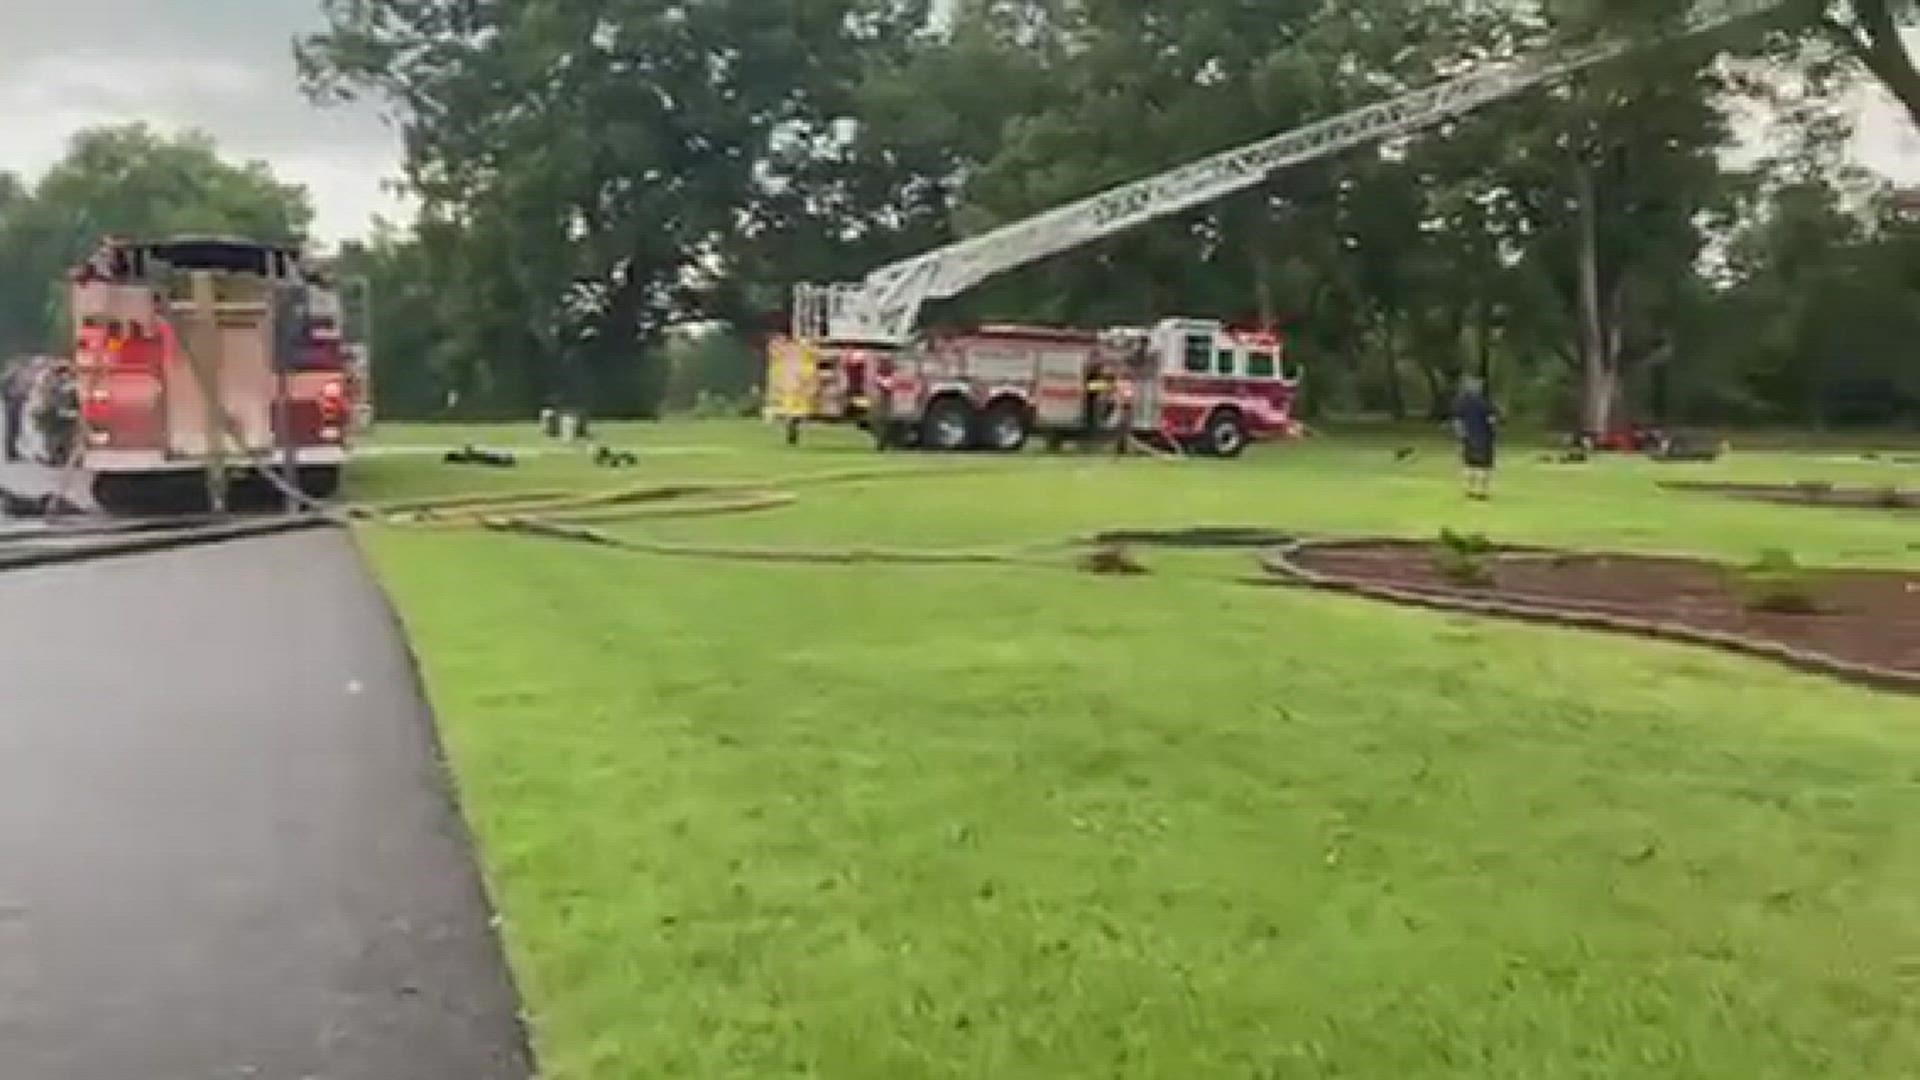 Bibb crews fight lightning fire at Peninsula Avenue home
Credit: Raime